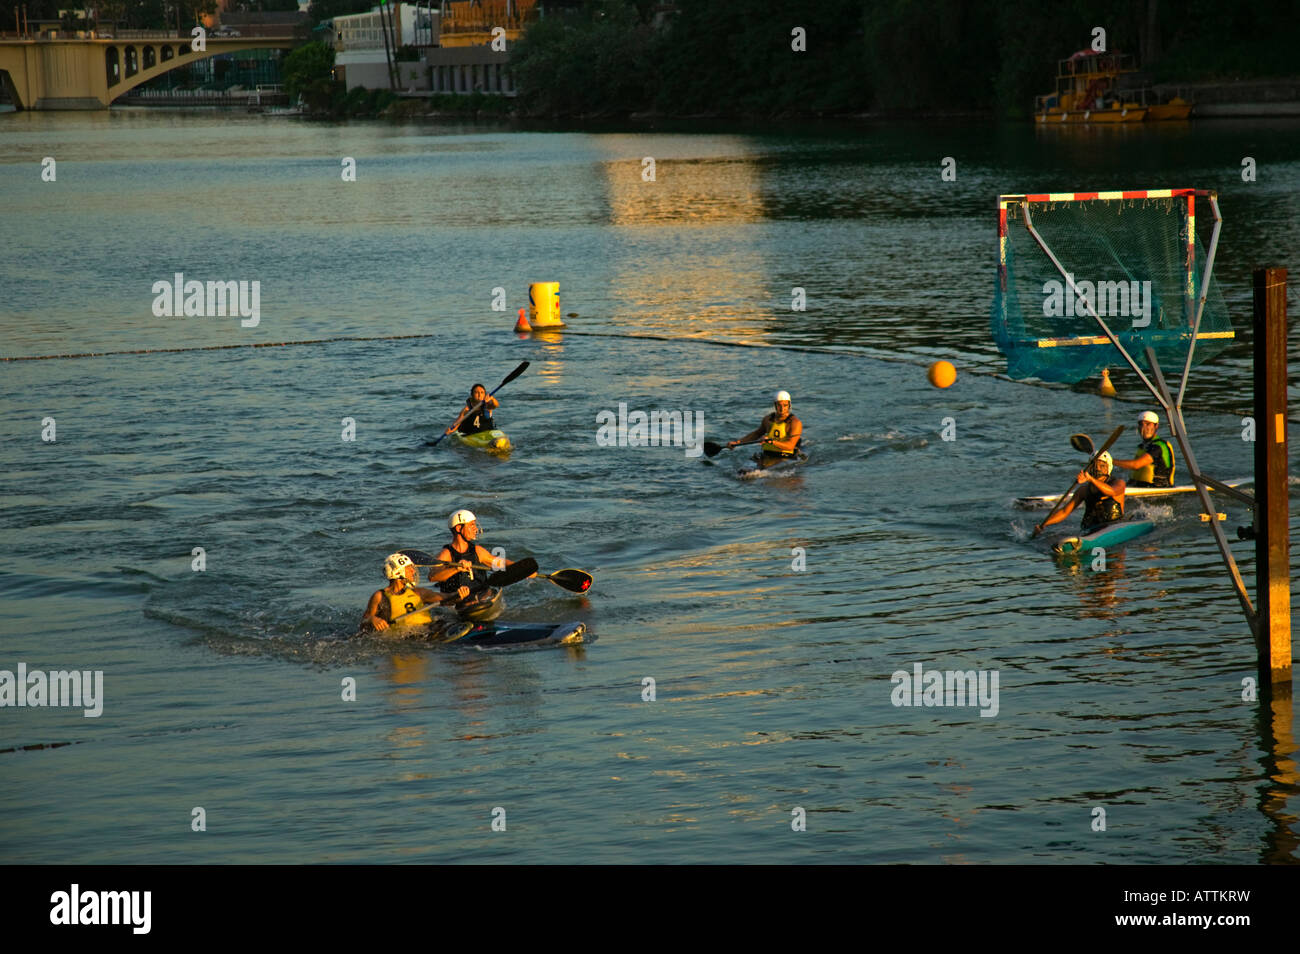 Kajak, Wasserball, Wassersport am Fluss Guadalquivir, Sevilla, Andalusien  Stockfotografie - Alamy